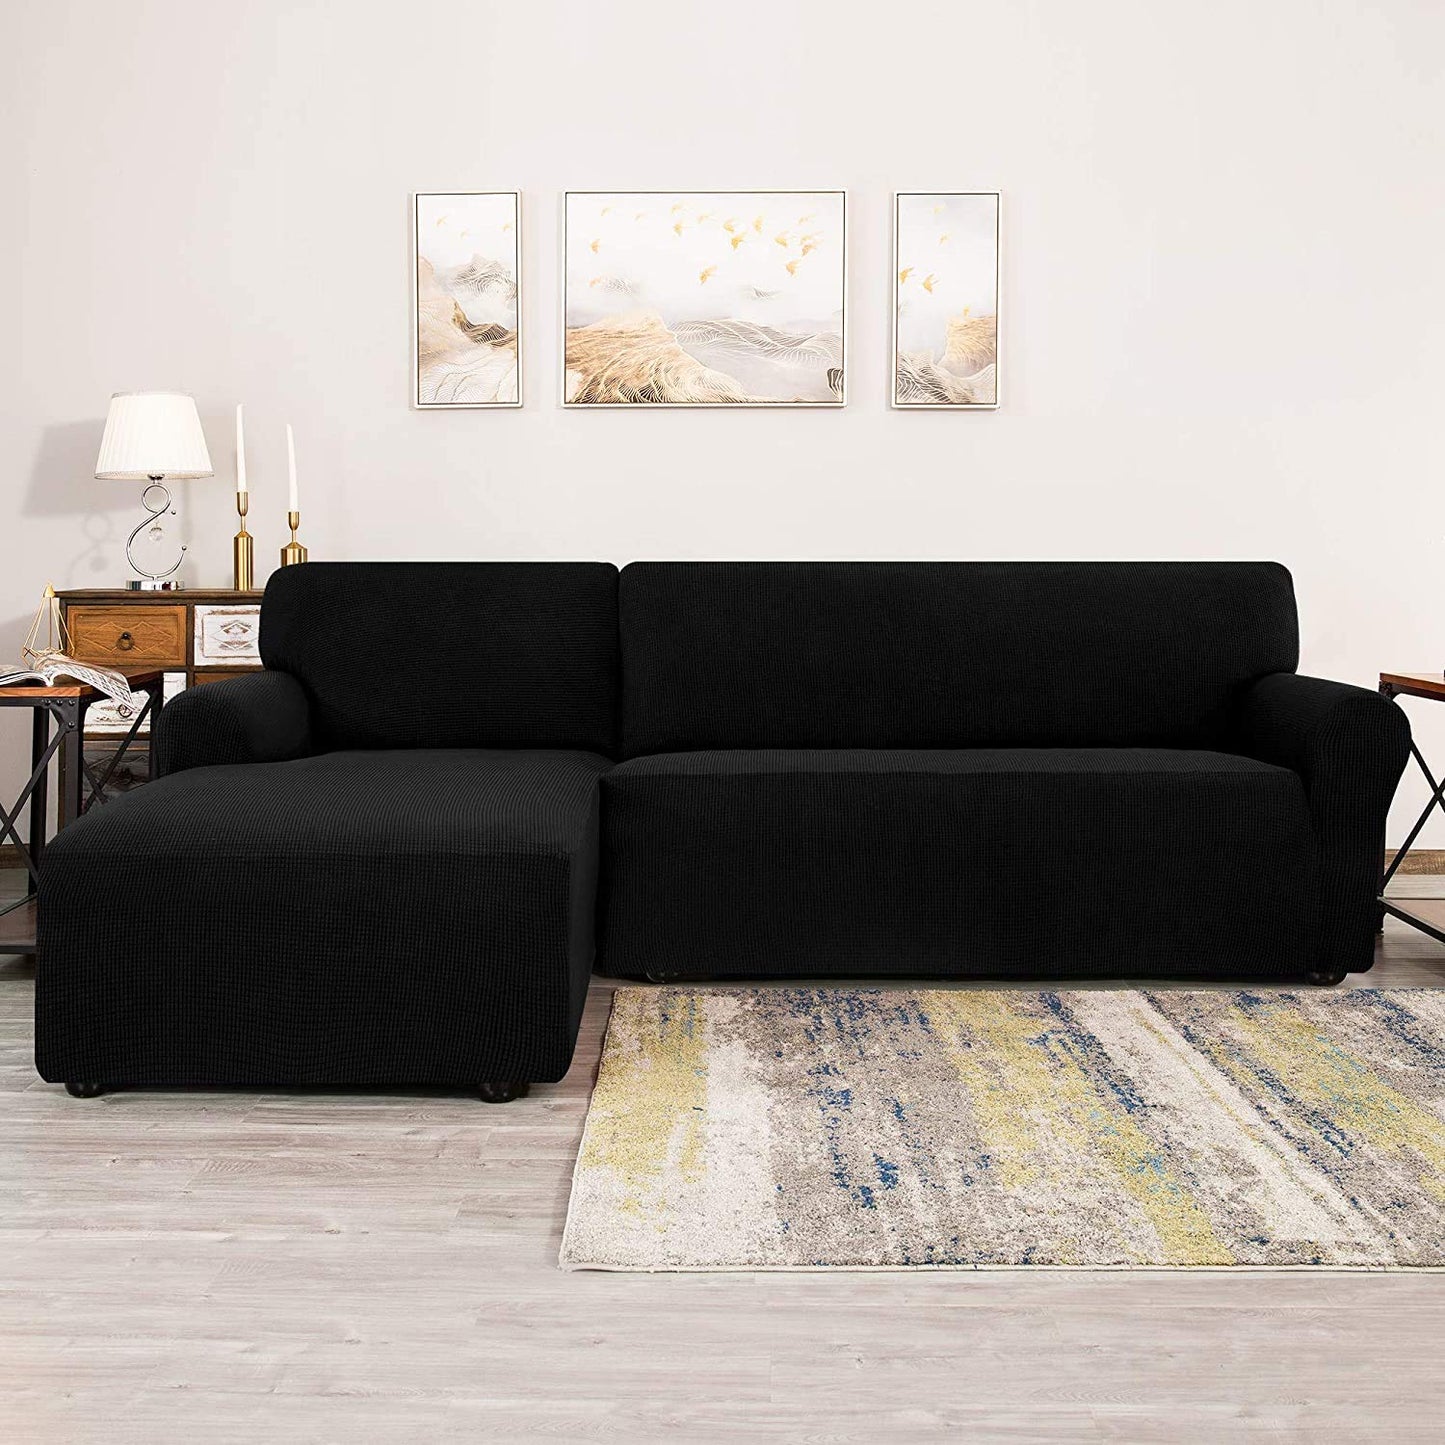 Magic Sofa Covers : Slip Covers for your sofa